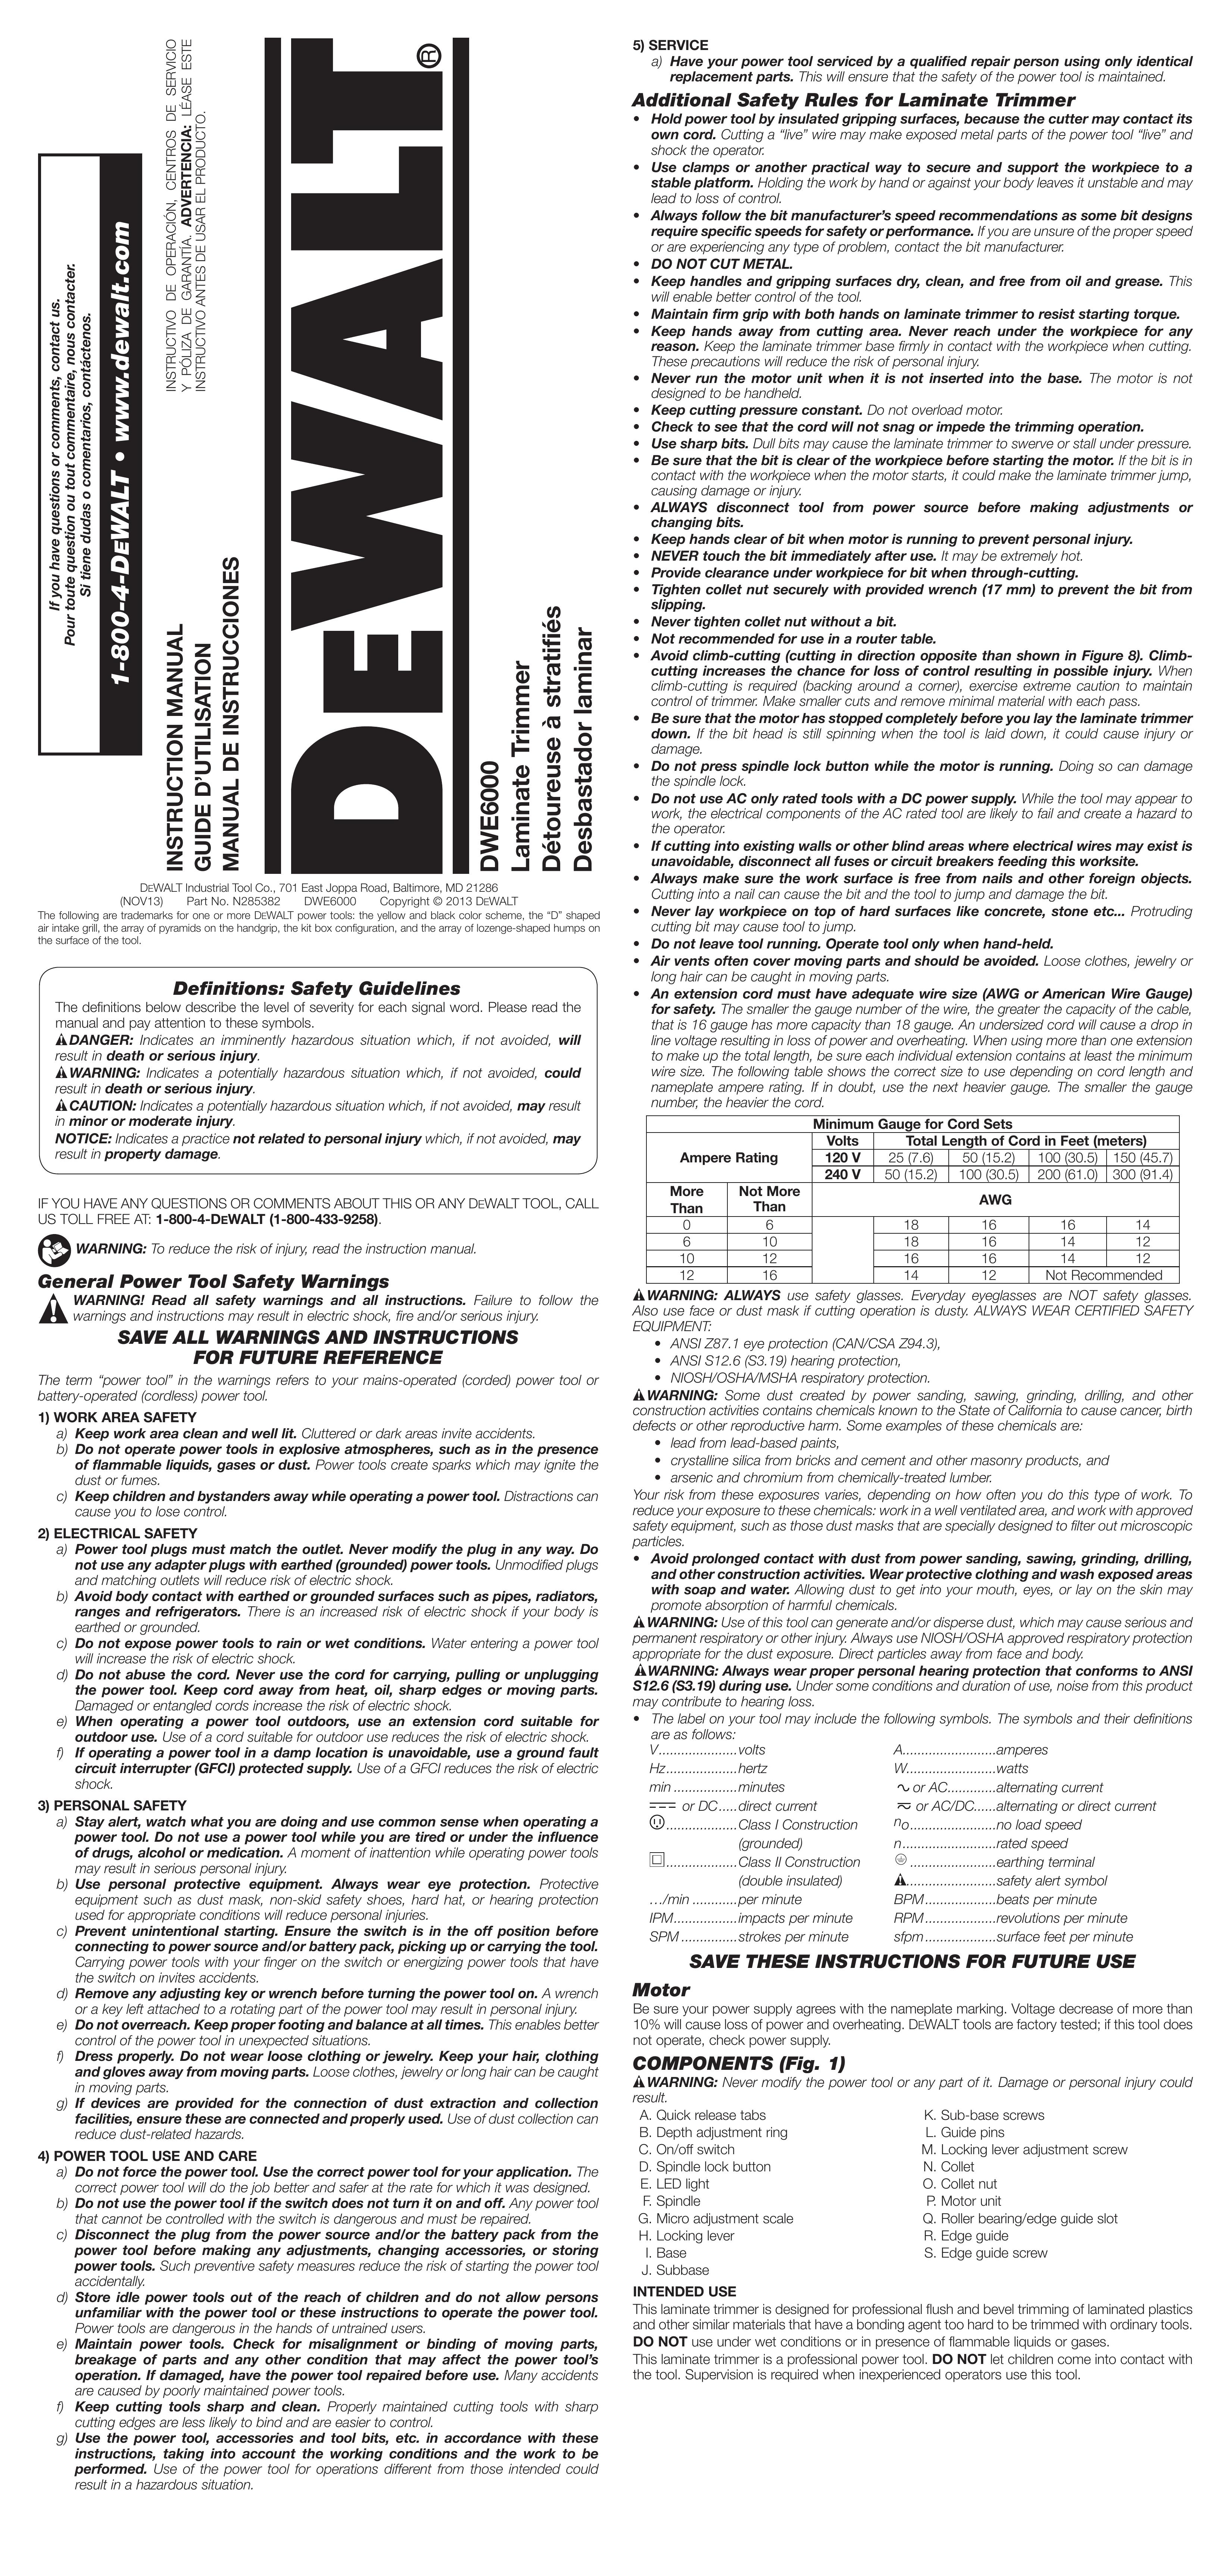 DeWalt DWE6000 Trimmer User Manual